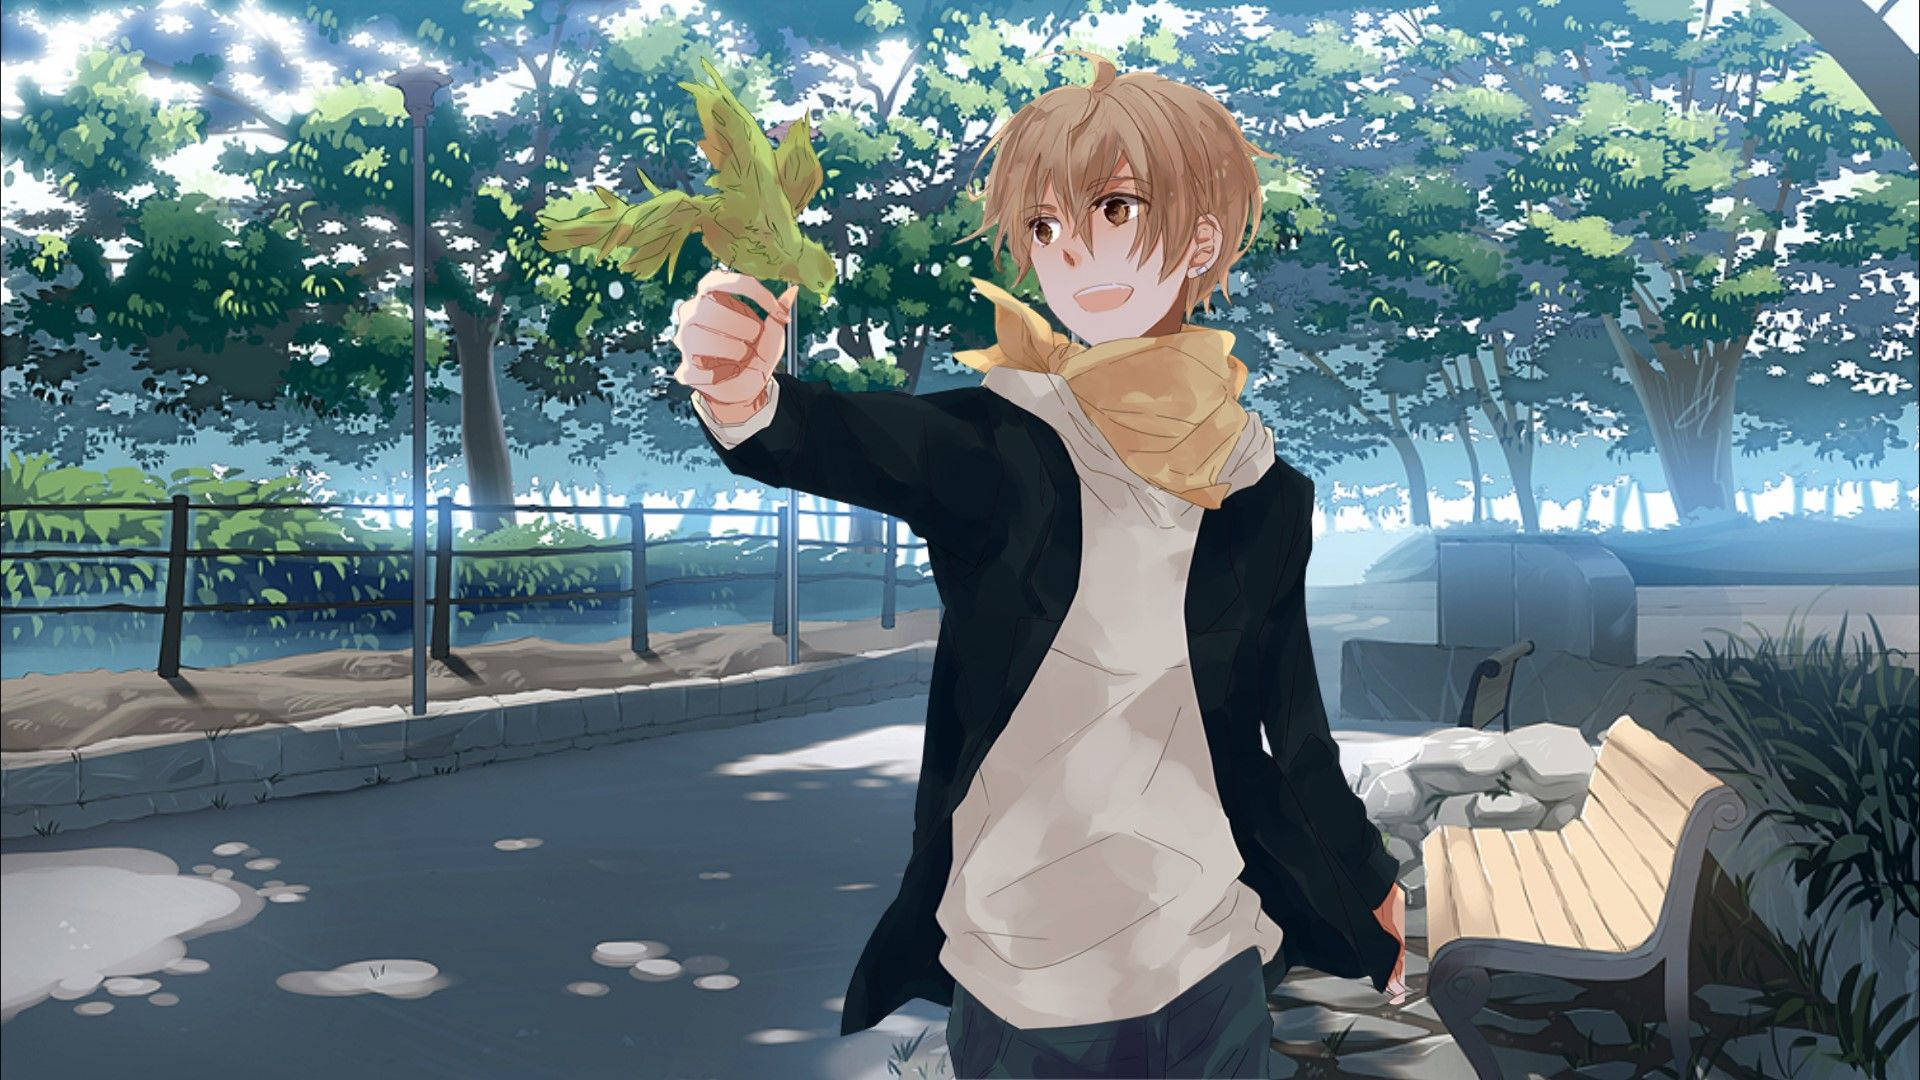 Cute Anime Boy In The Park Wallpaper